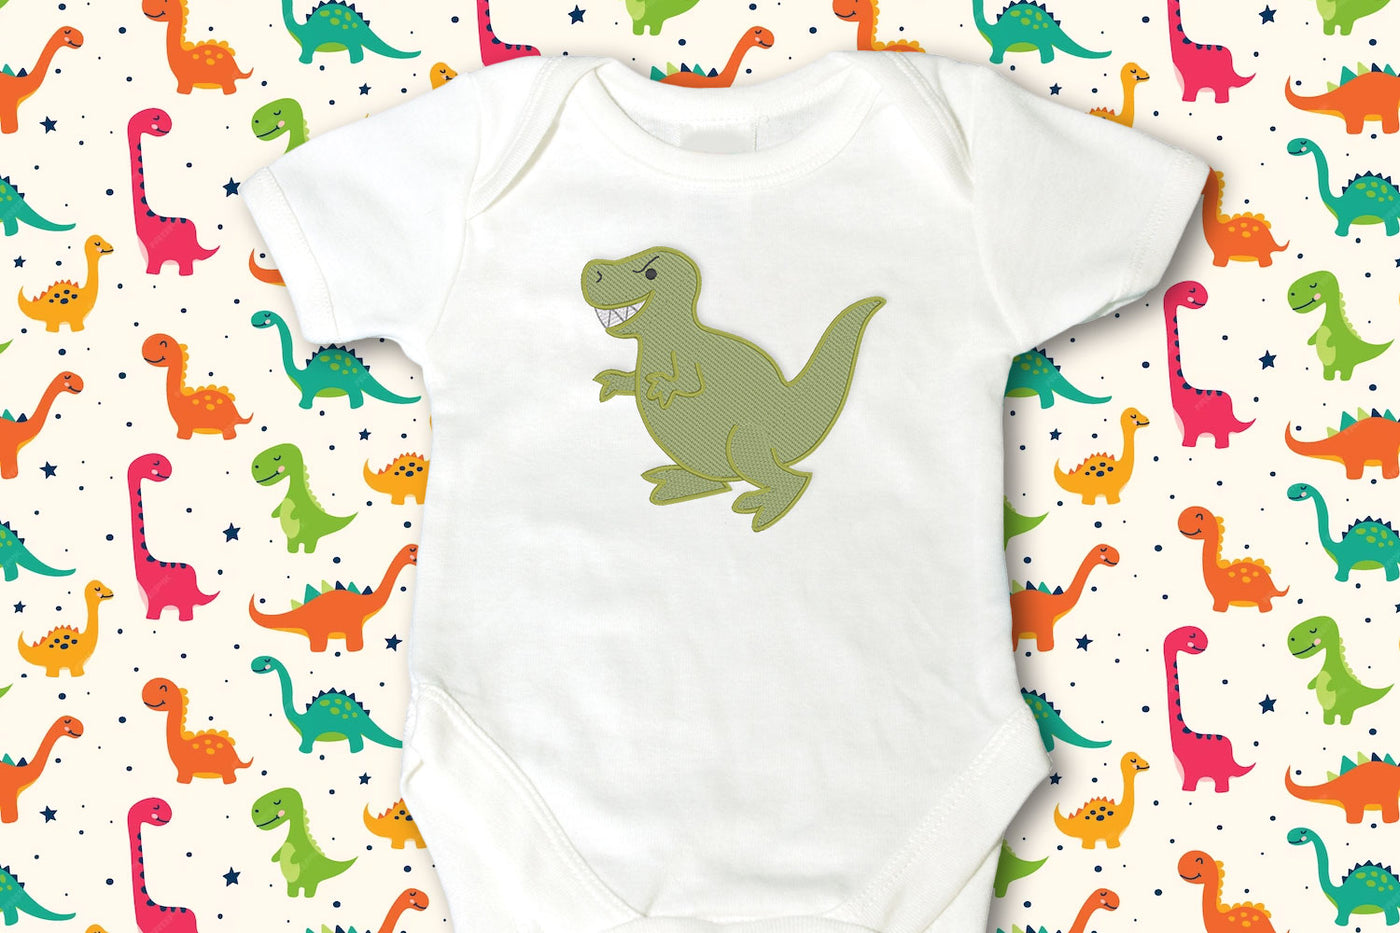 T-Rex Dinosaur Mini Embroidery